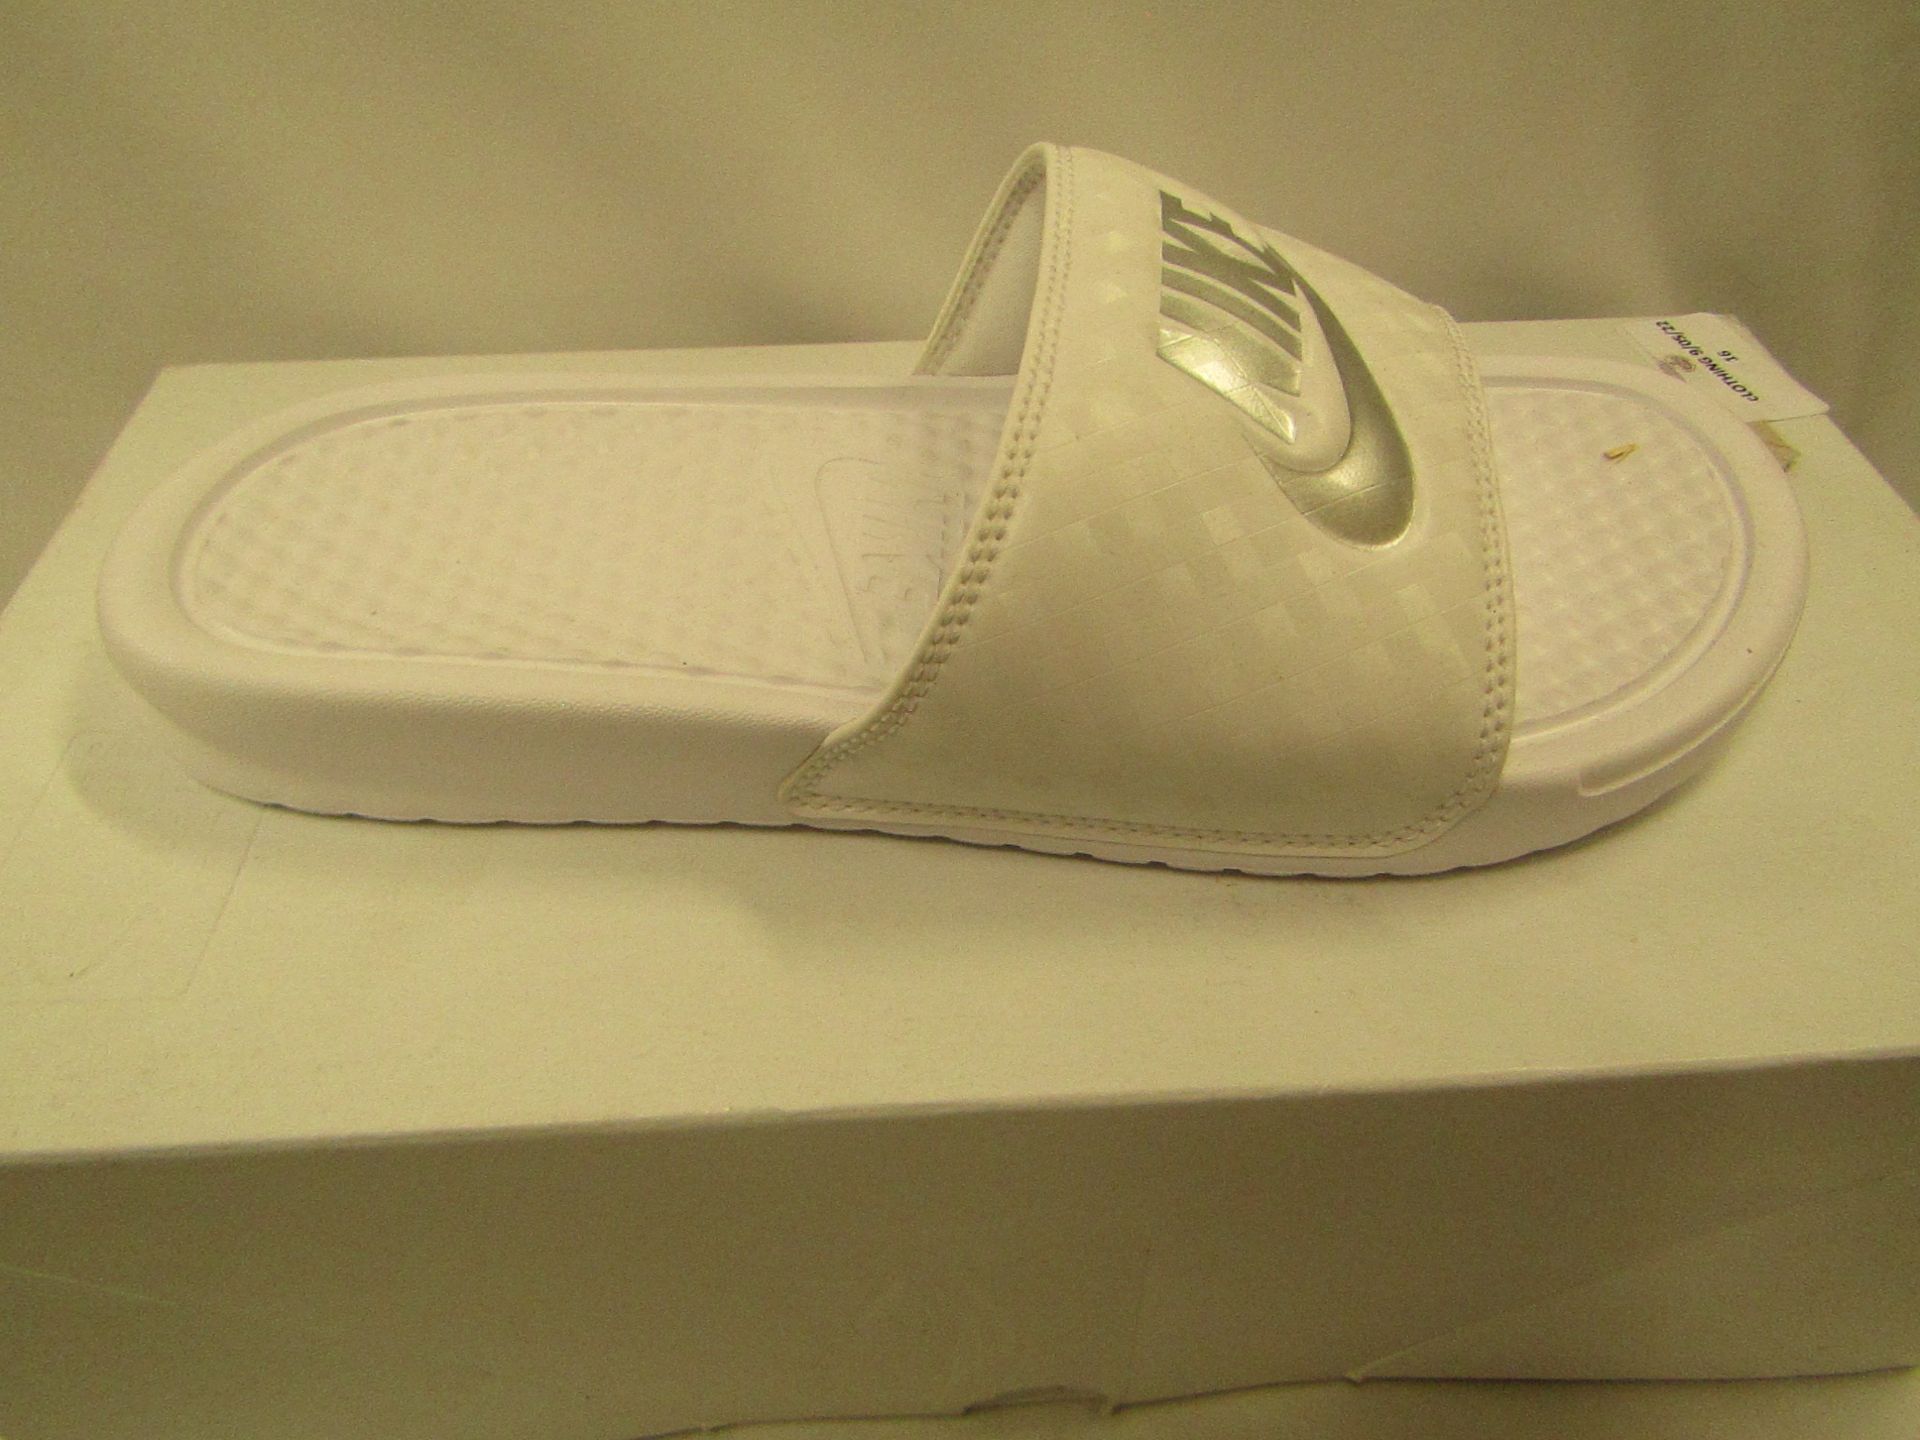 Nike Benassi Slides in White Size 3.5 New & Boxed